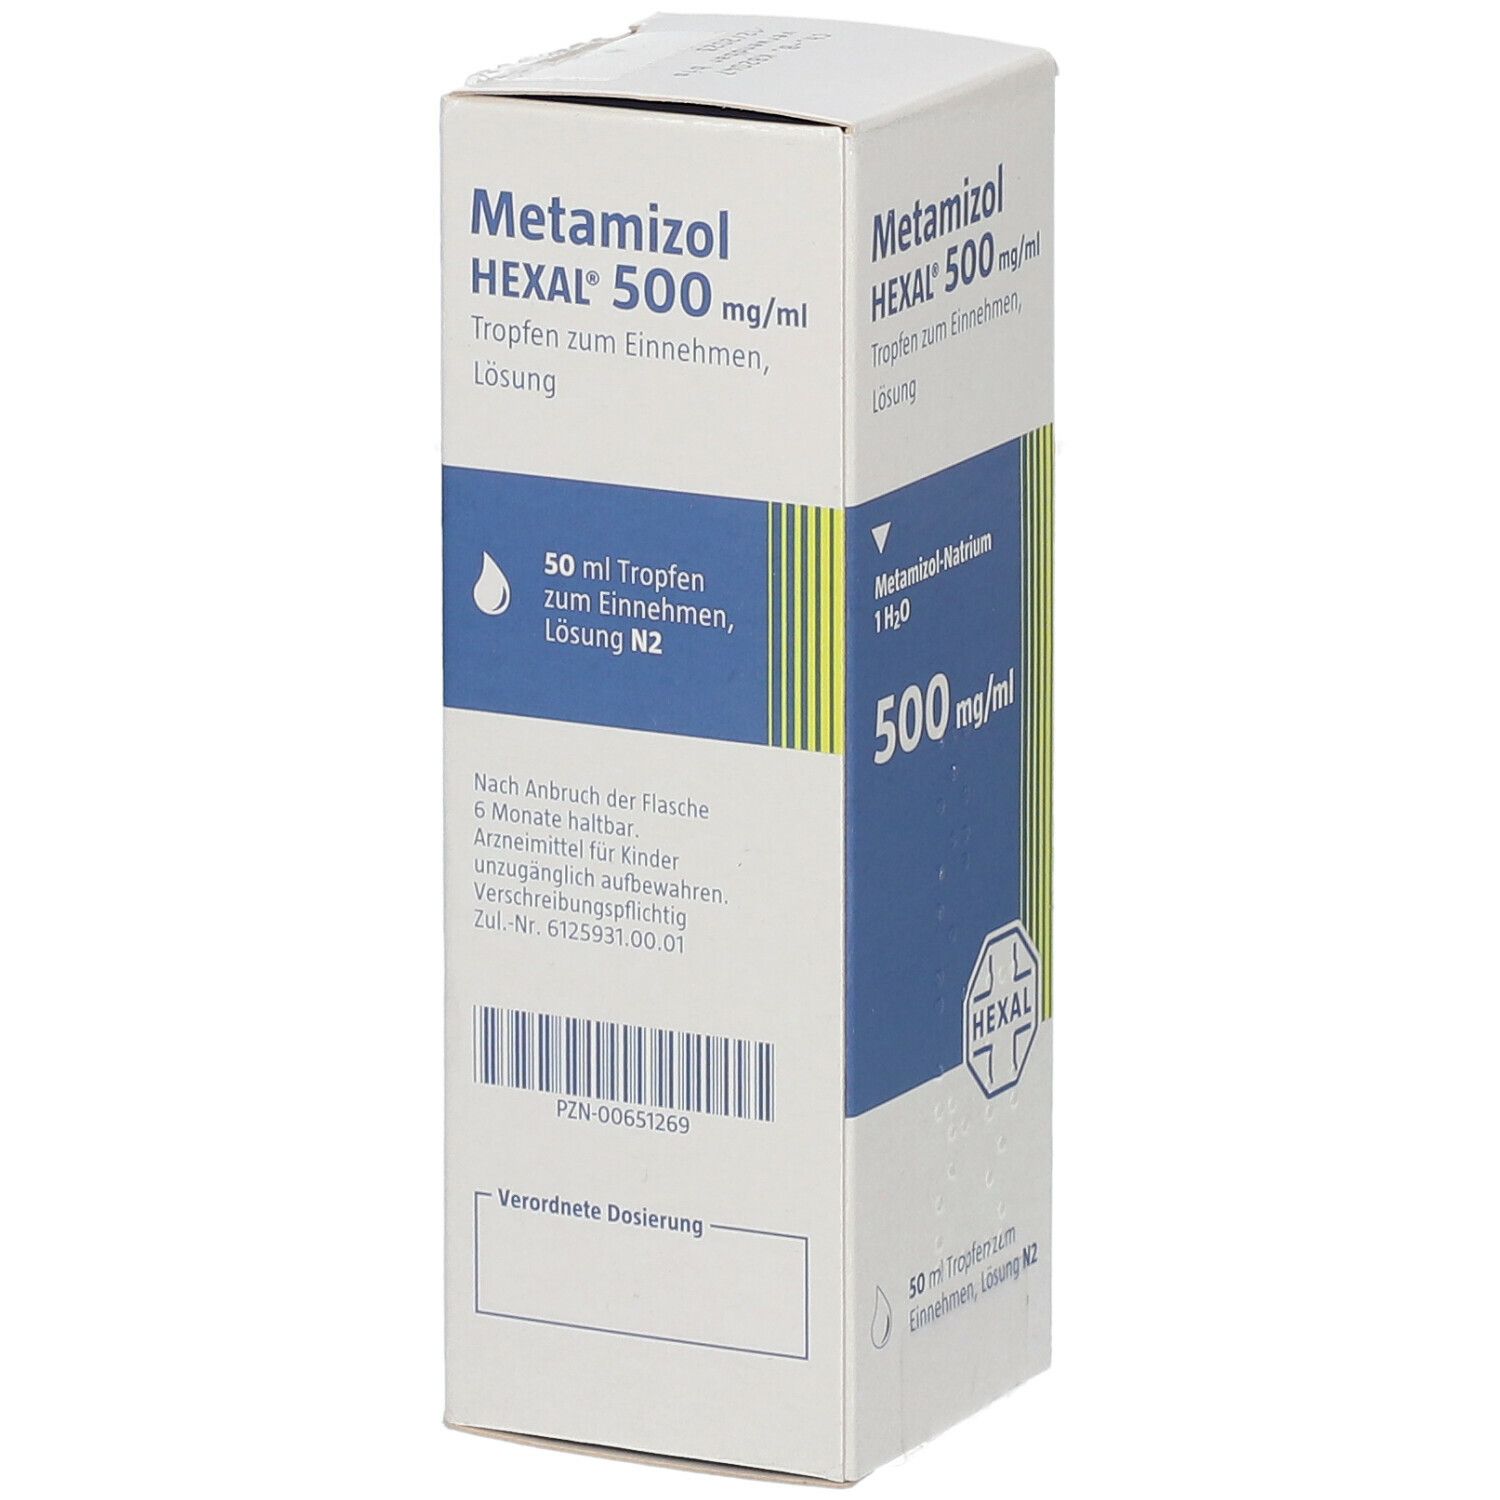 Metamizol HEXAL® 500 mg/ml